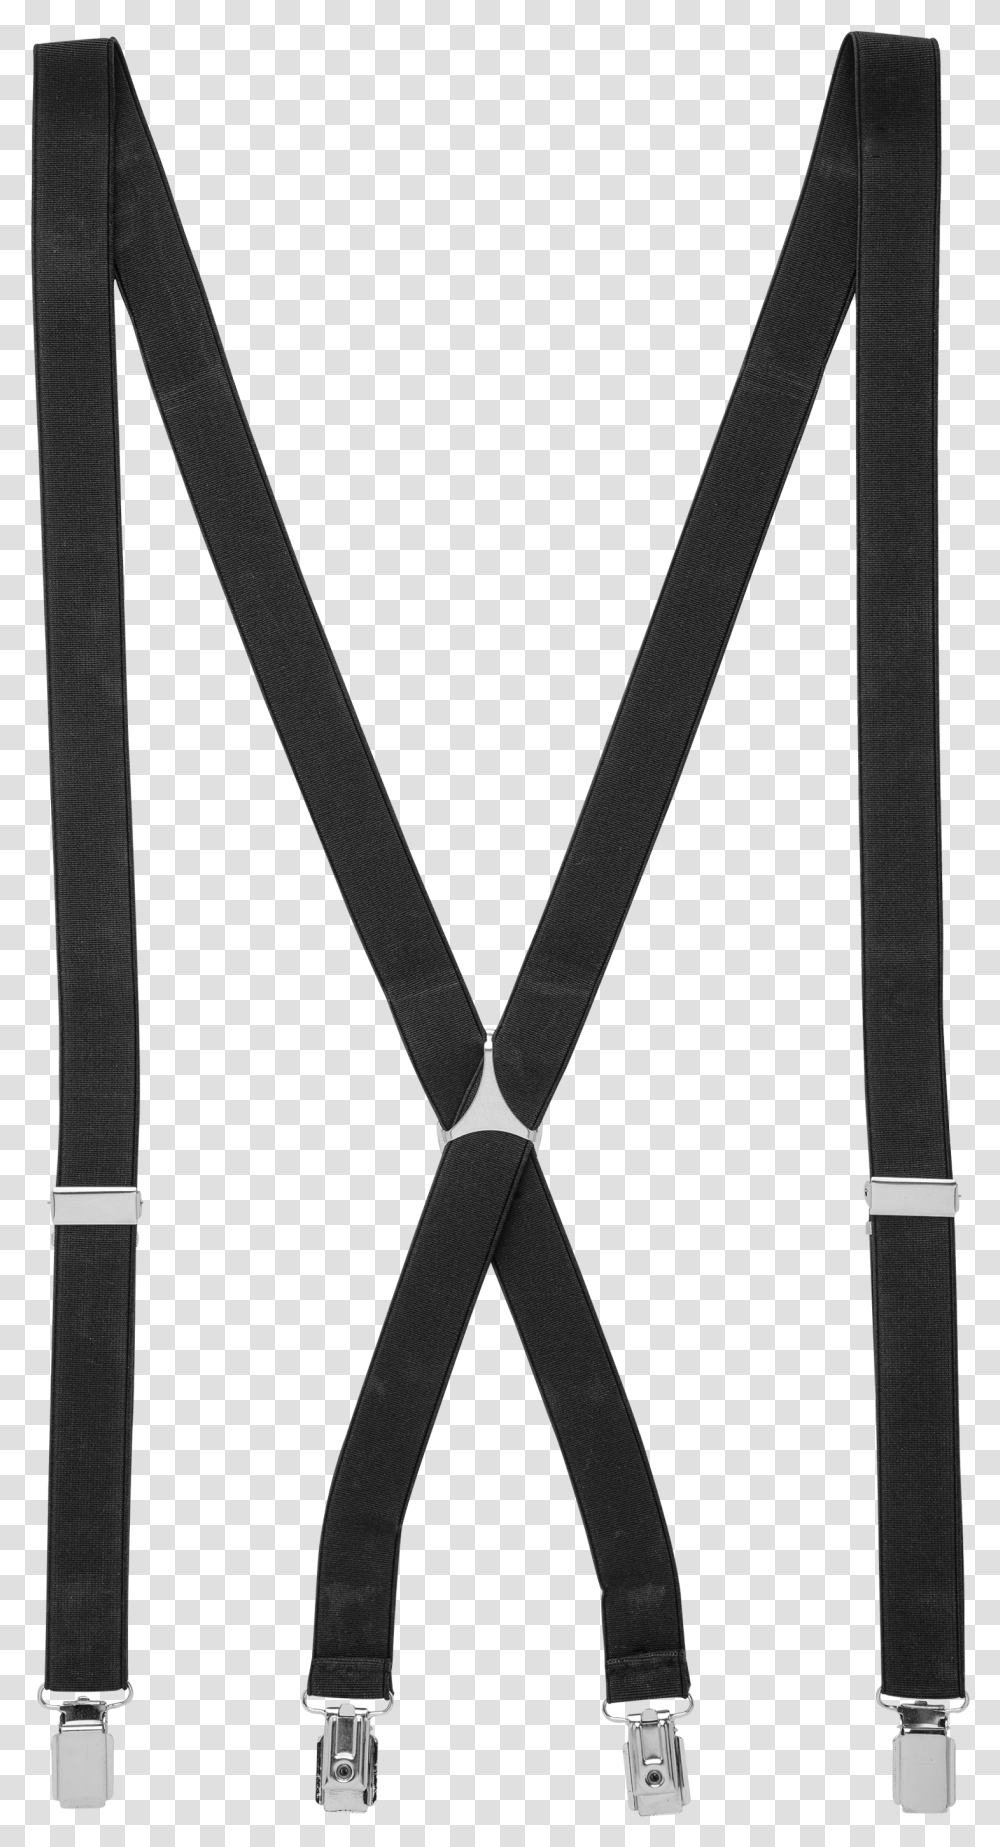 Download Hd Tarocash Plain Suspenders Black Suspenders, Strap, Sword, Blade, Weapon Transparent Png